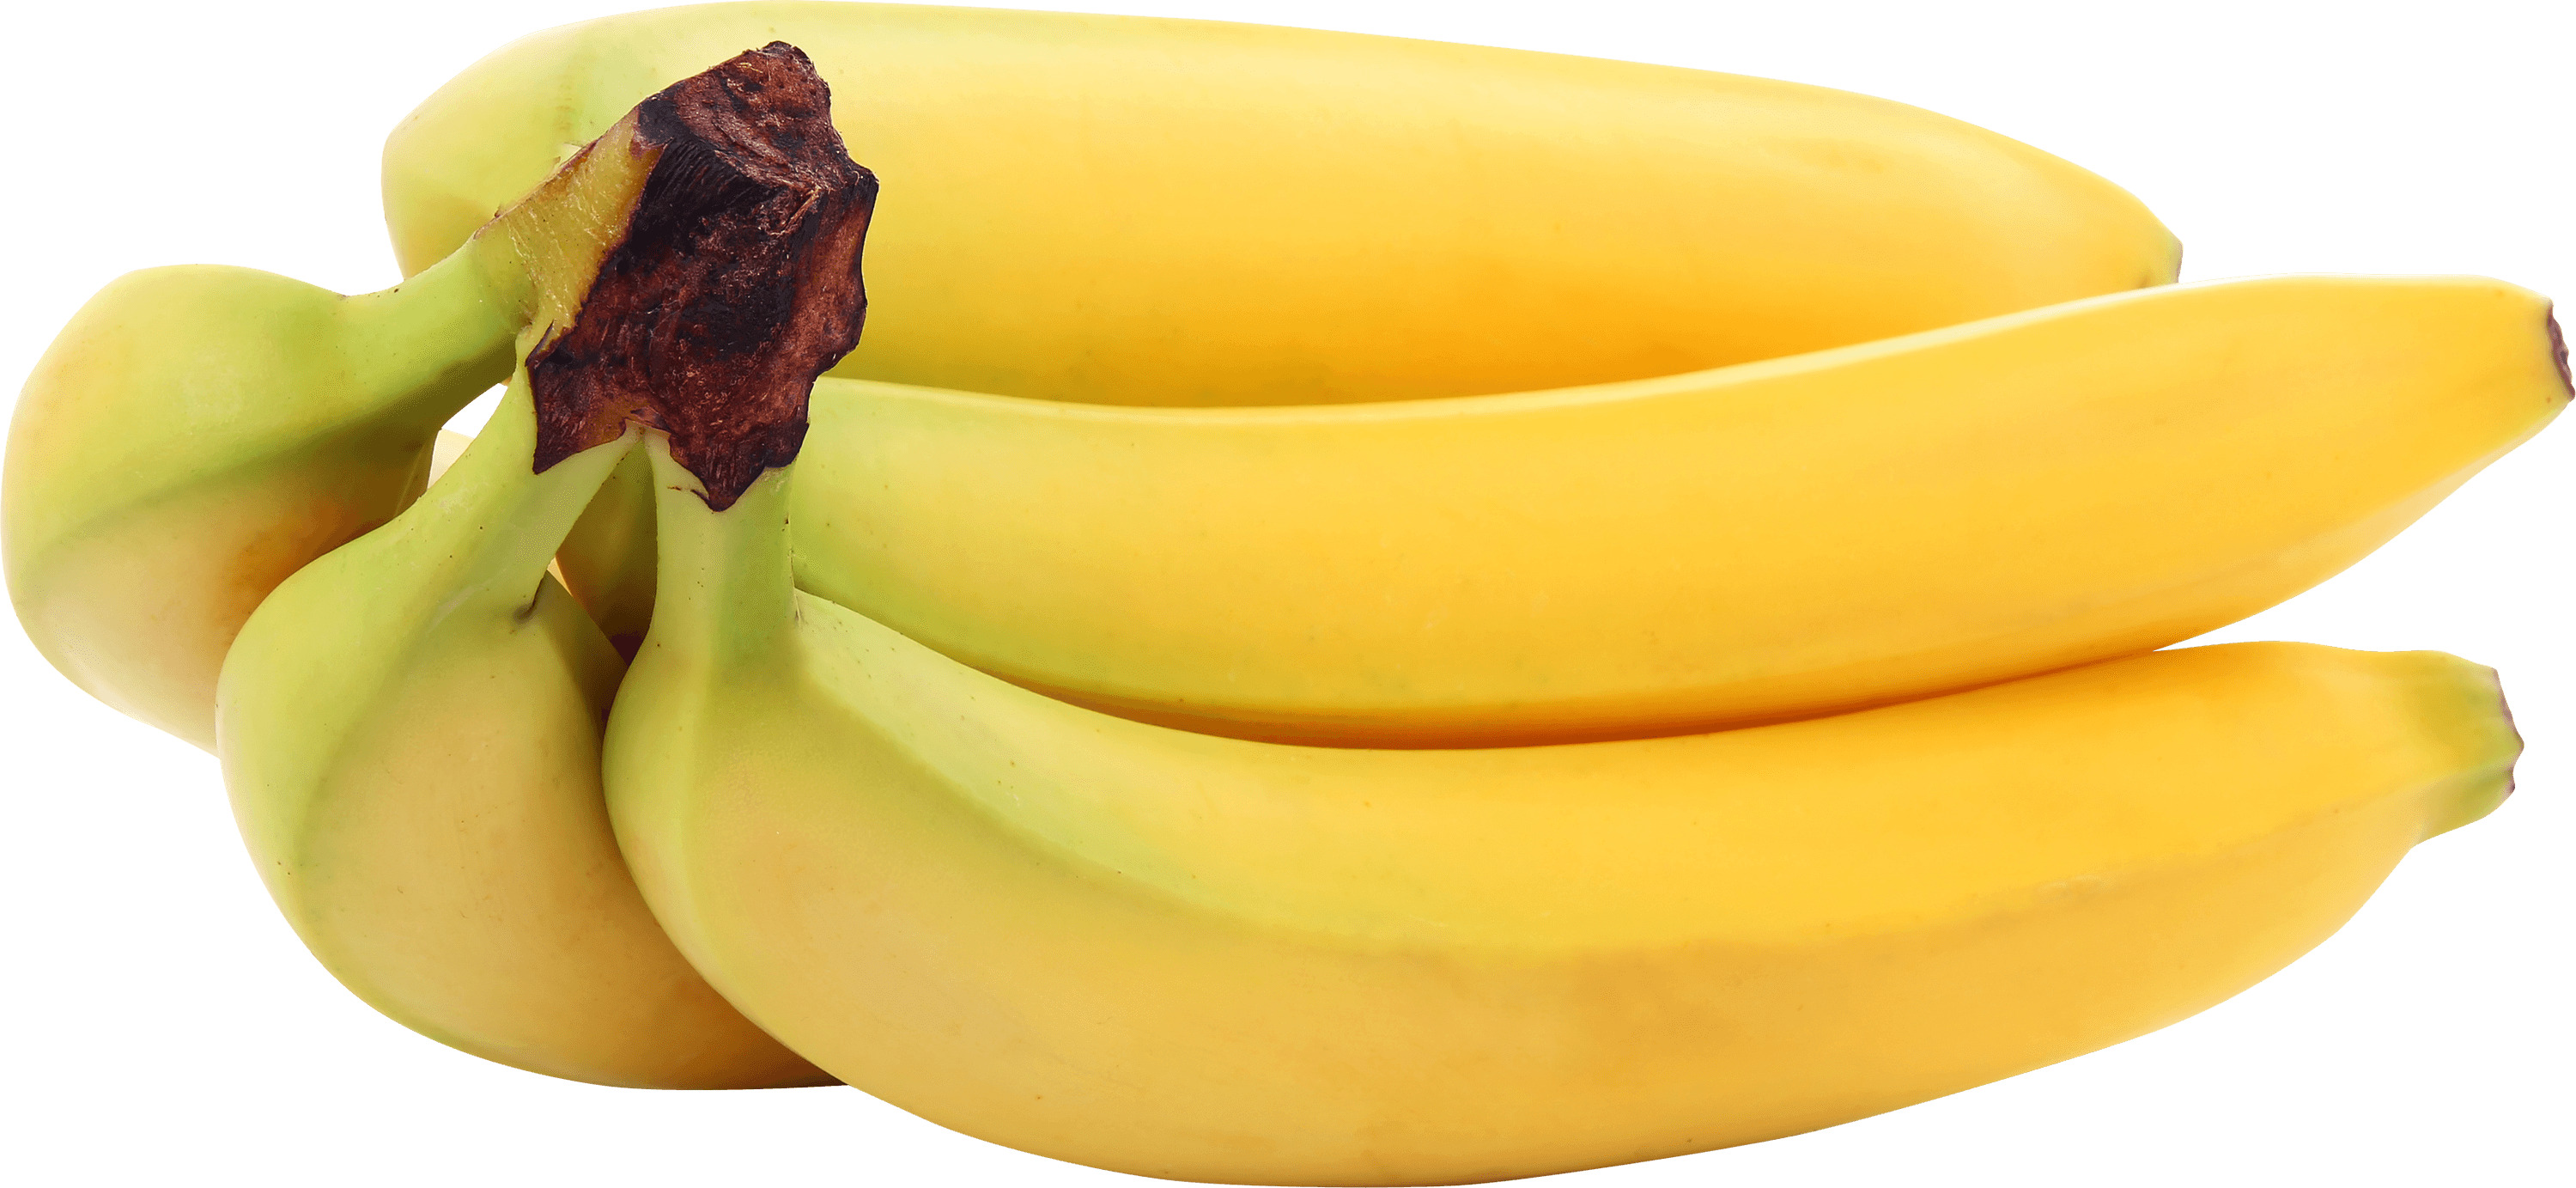 Banana Bunch png icons